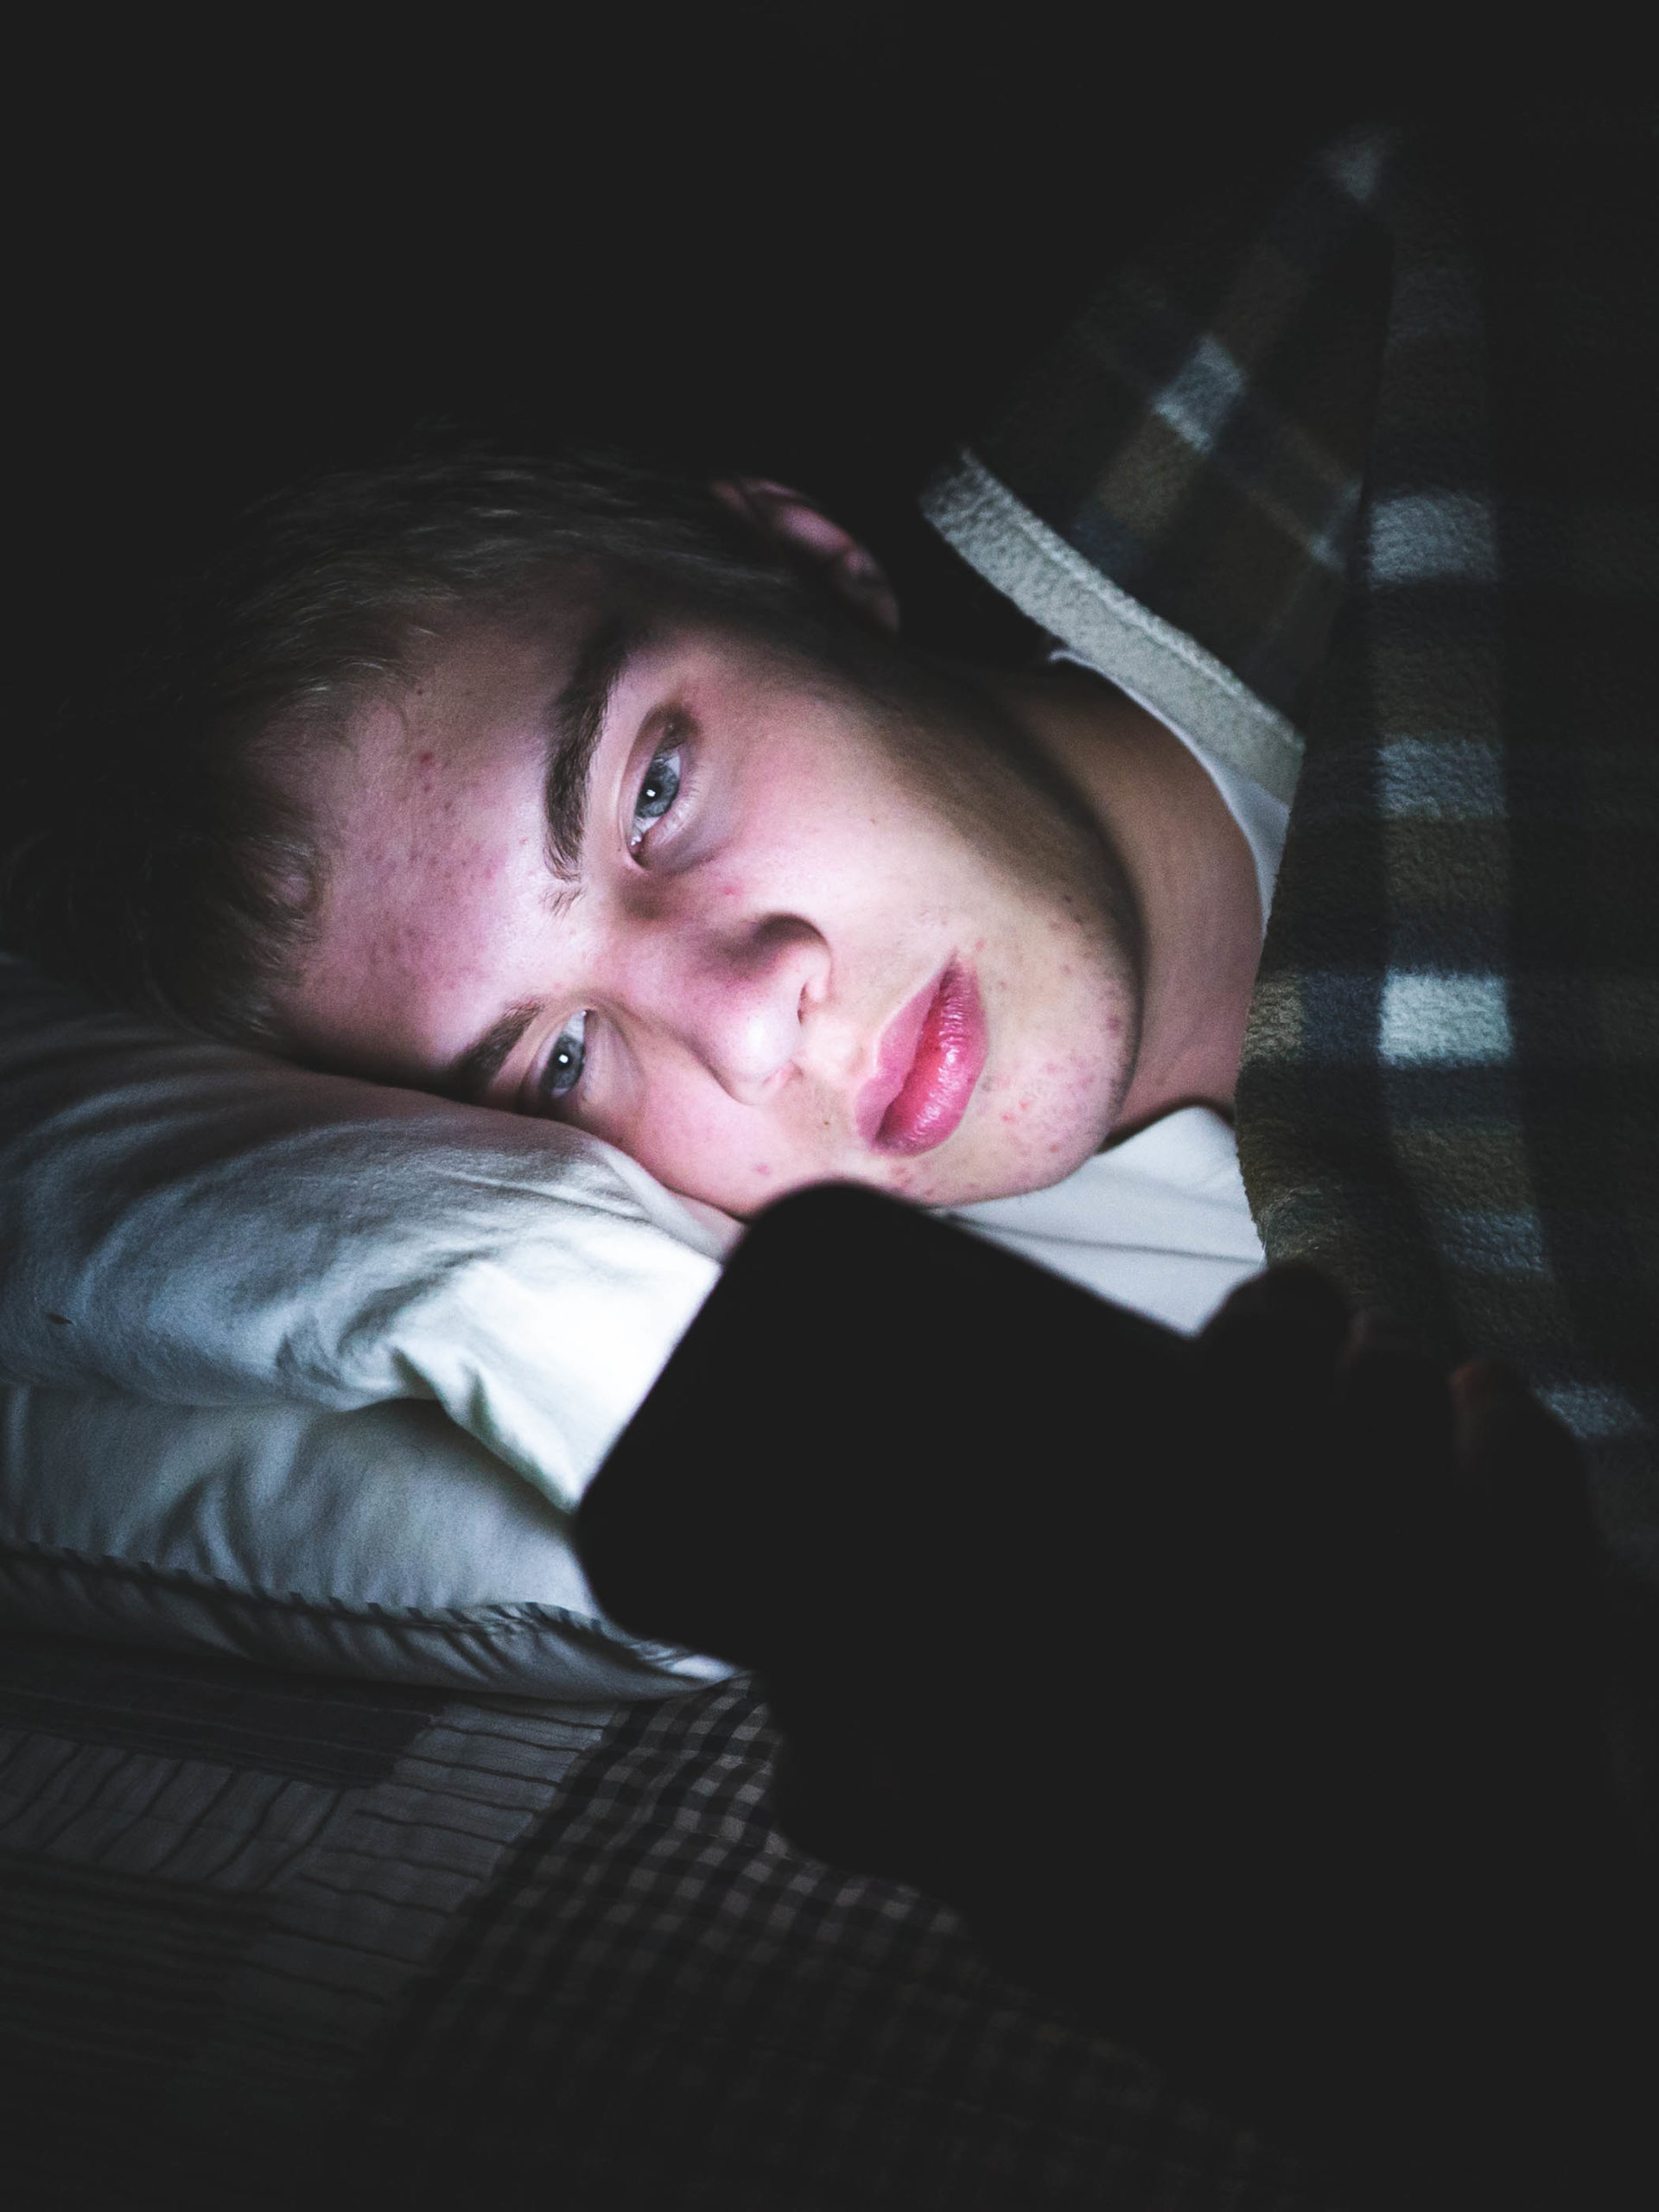 depressed teen boy scrolling through social media late at night